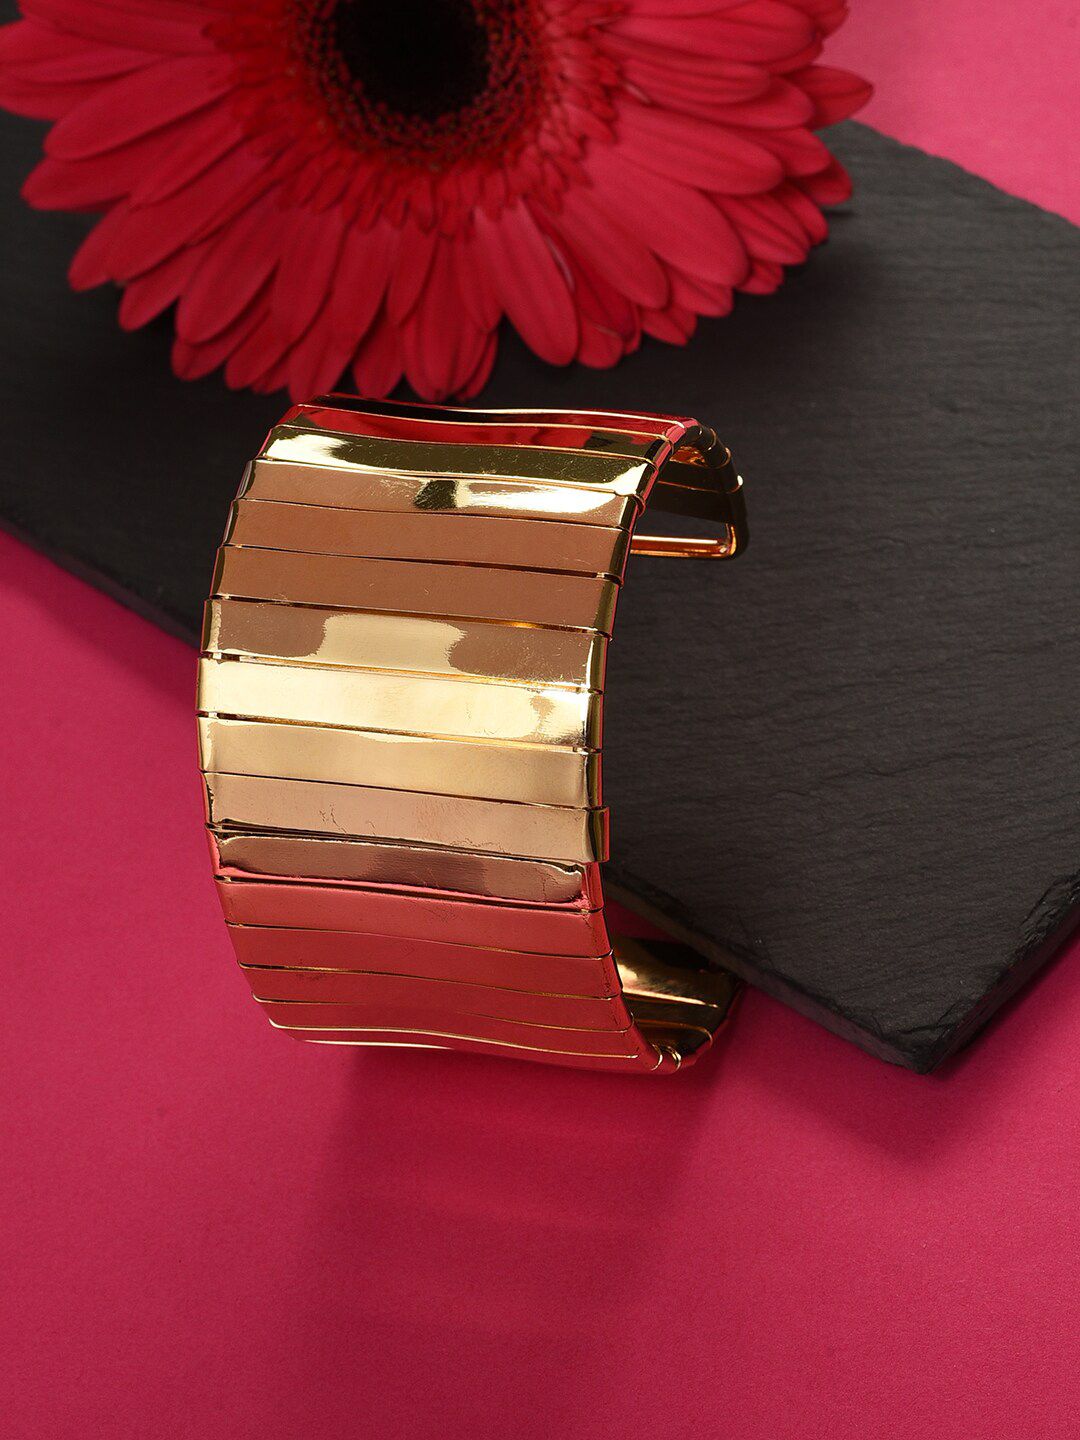 SOHI Women Gold-Toned Cuff Bracelet Price in India